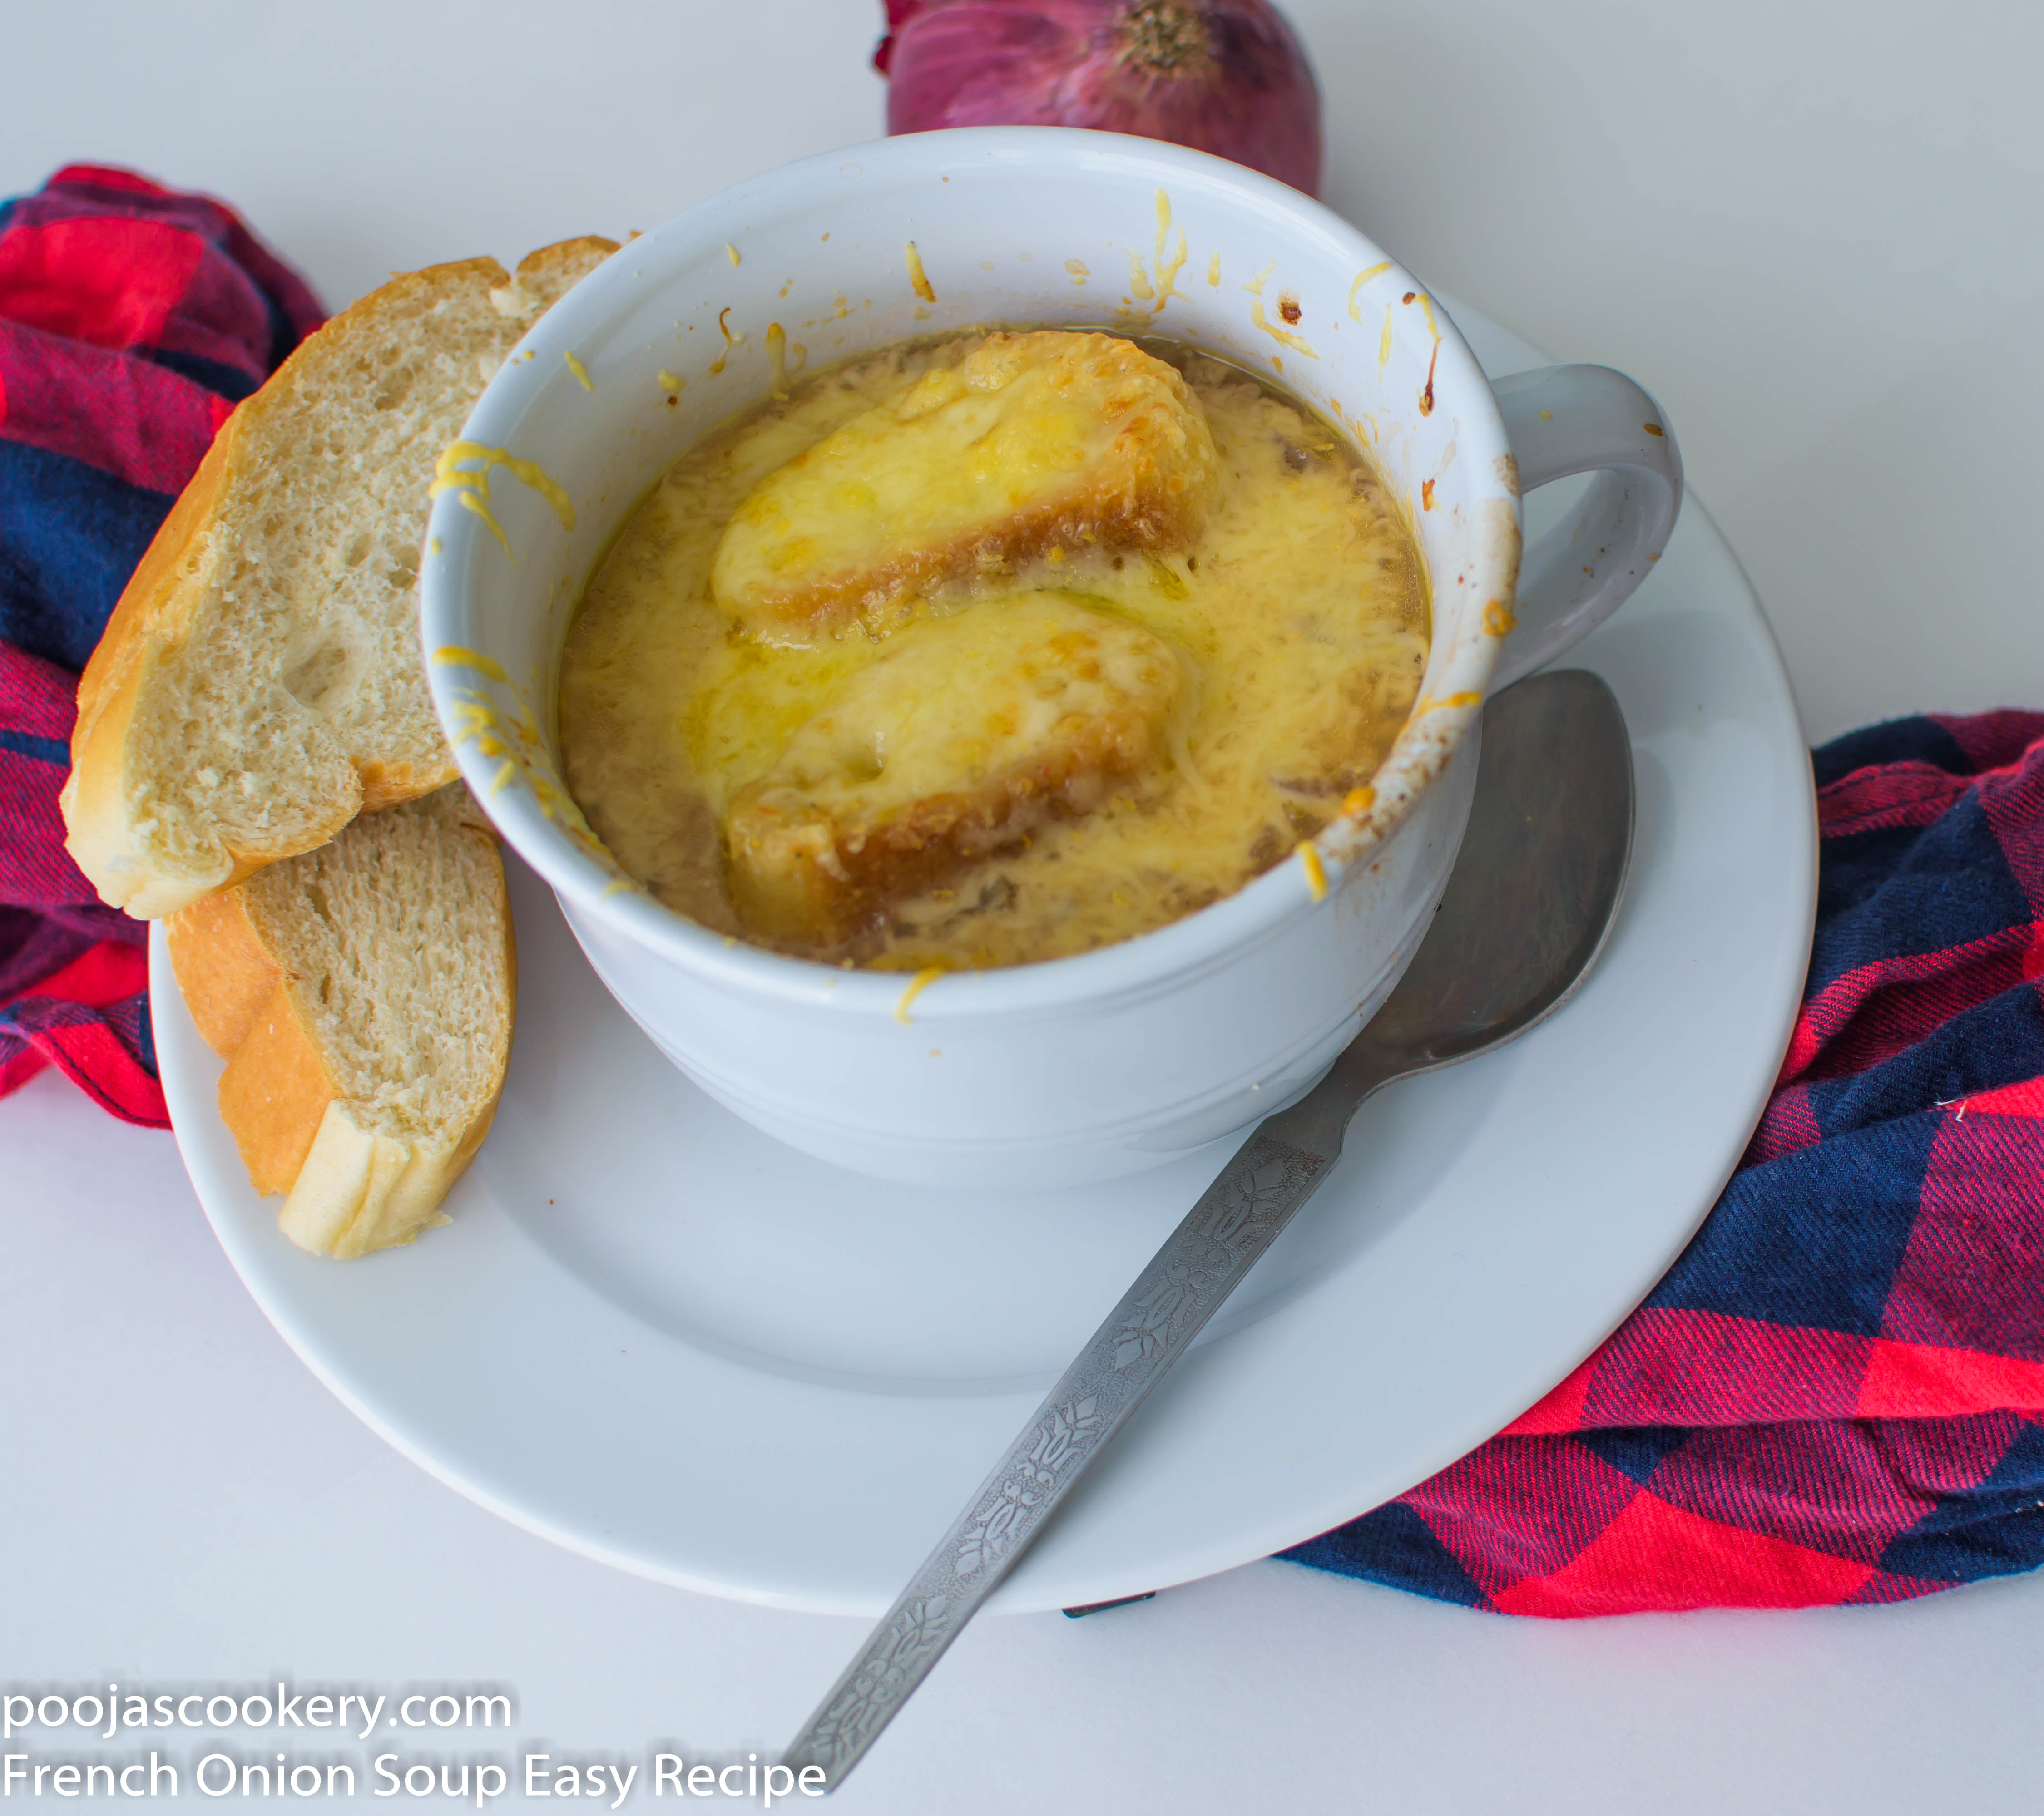 French Onion Soup Easy Recipe| poojascookery.com